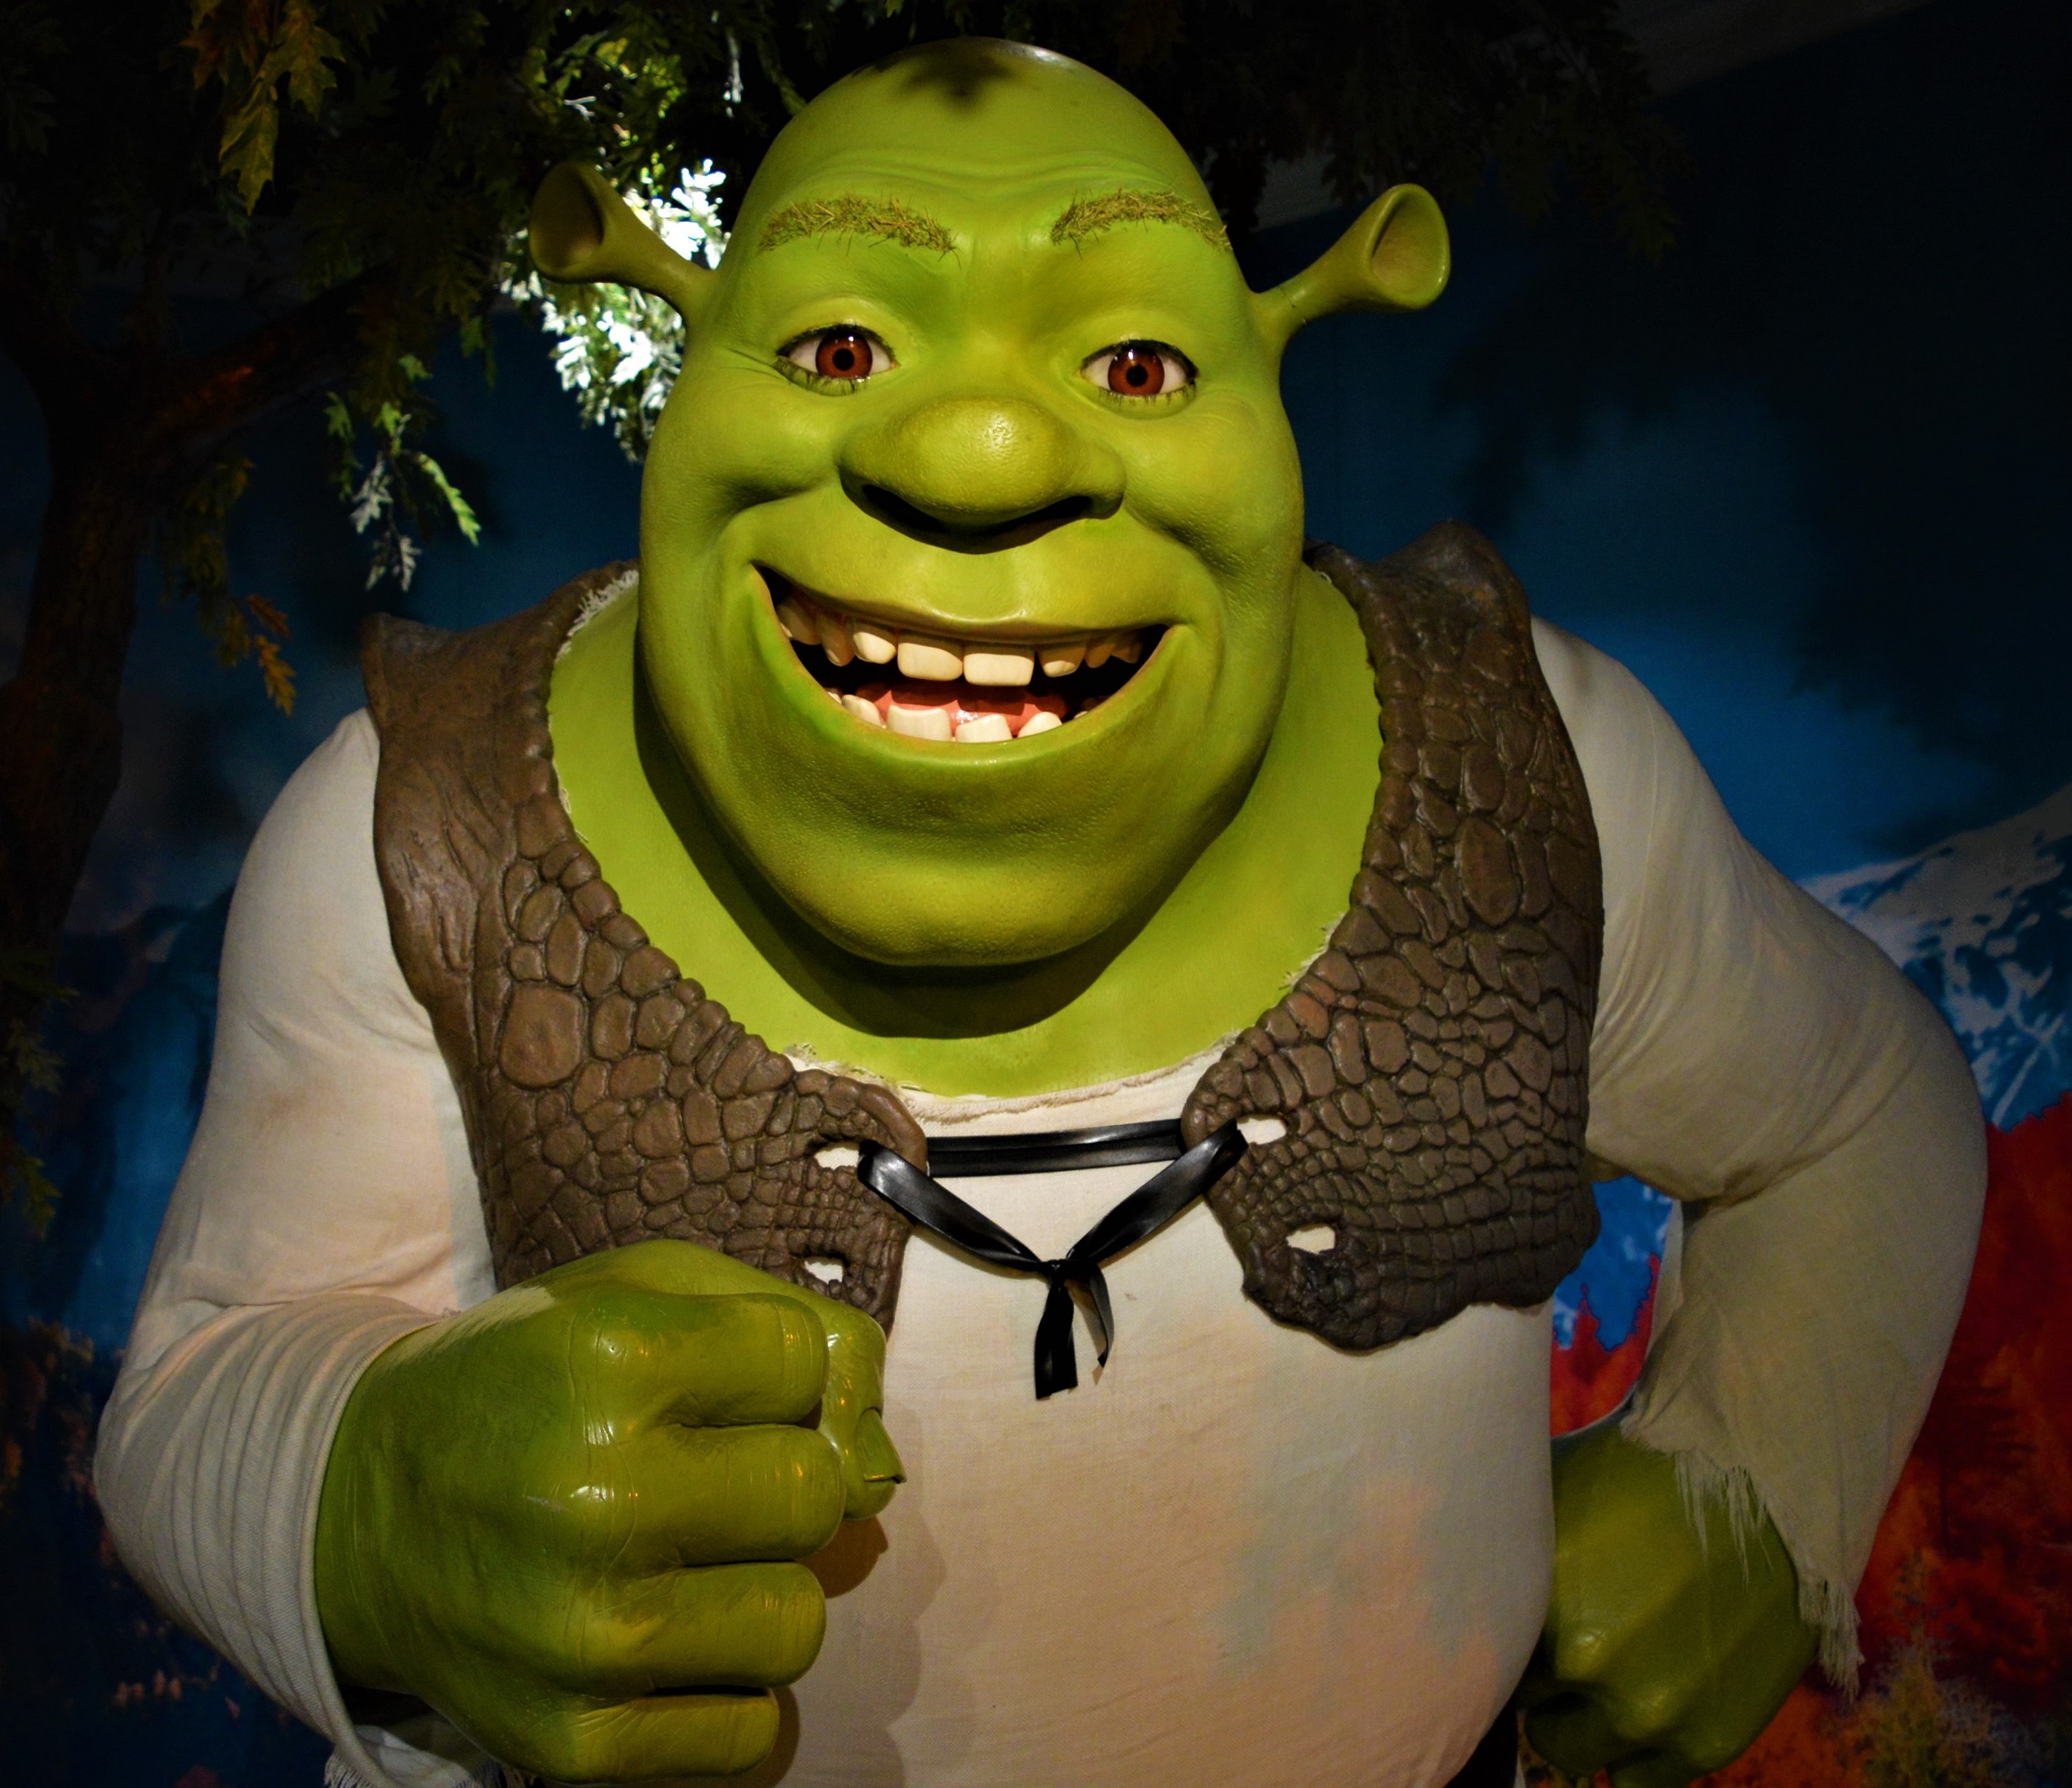 A wax figure of Shrek smiling